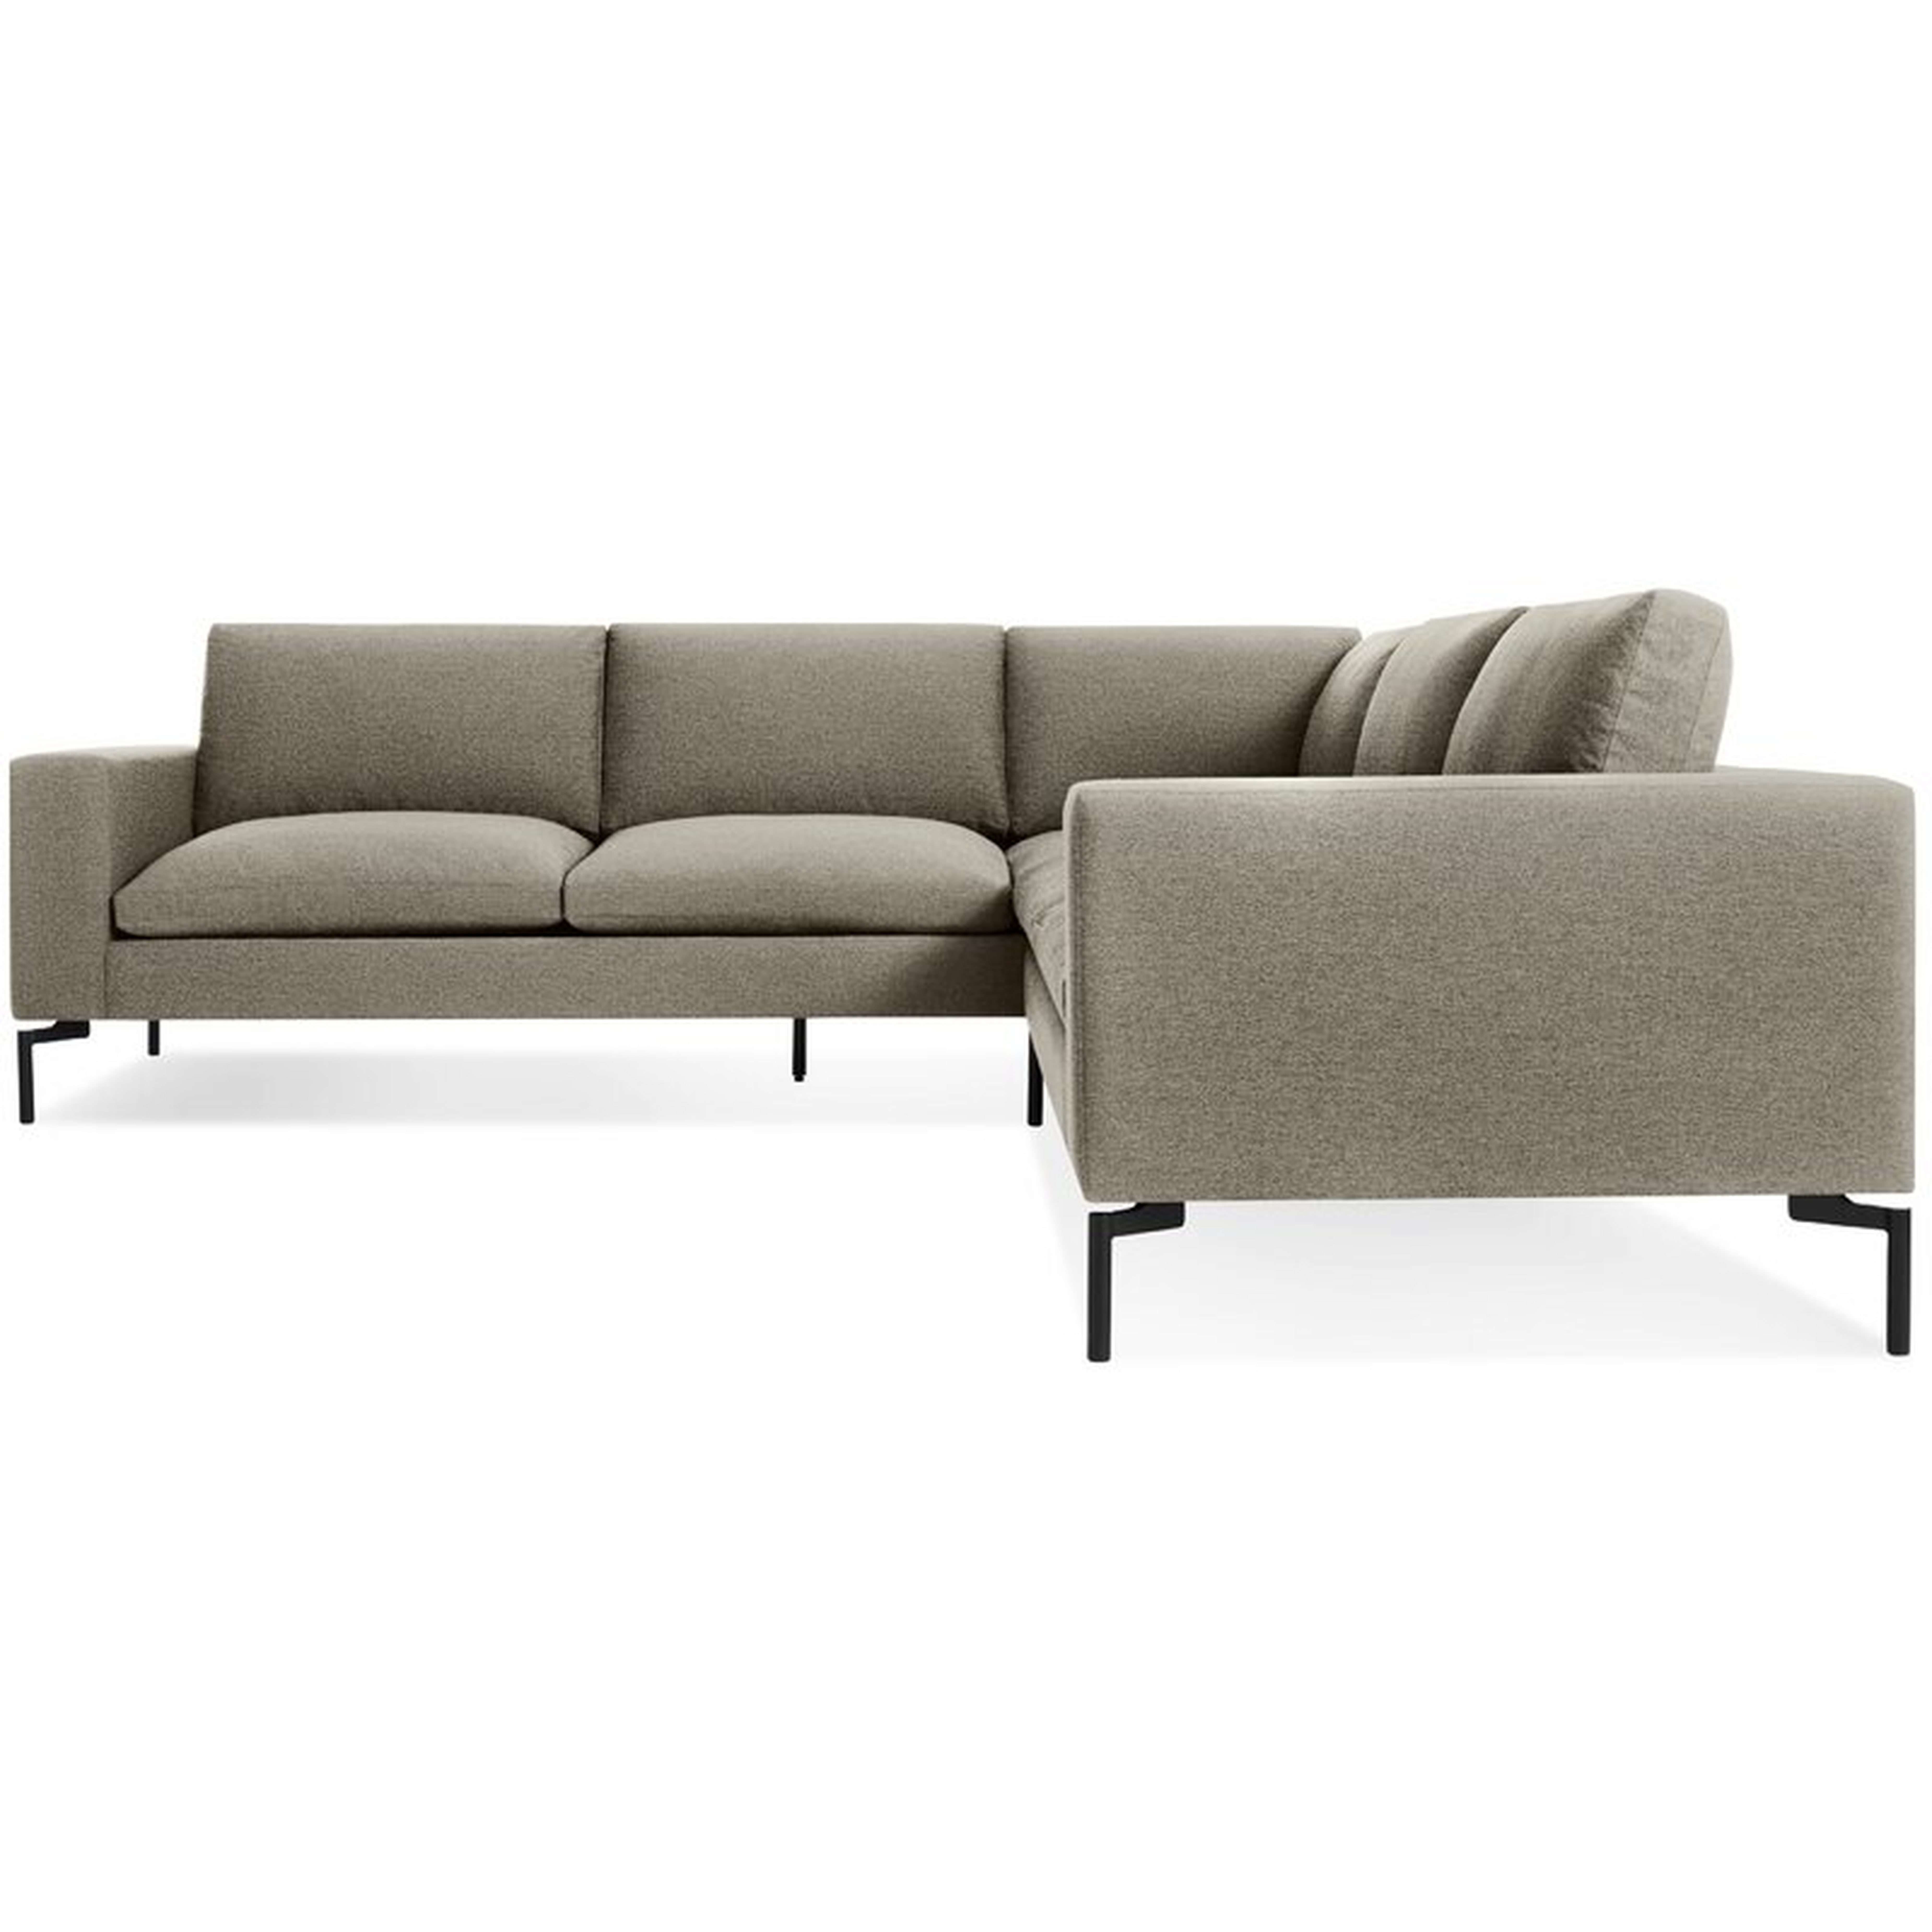 Blu Dot The New Standard Sectional Sofa - Small Body Fabric: Sanford Black, Leg Color: Black - Perigold